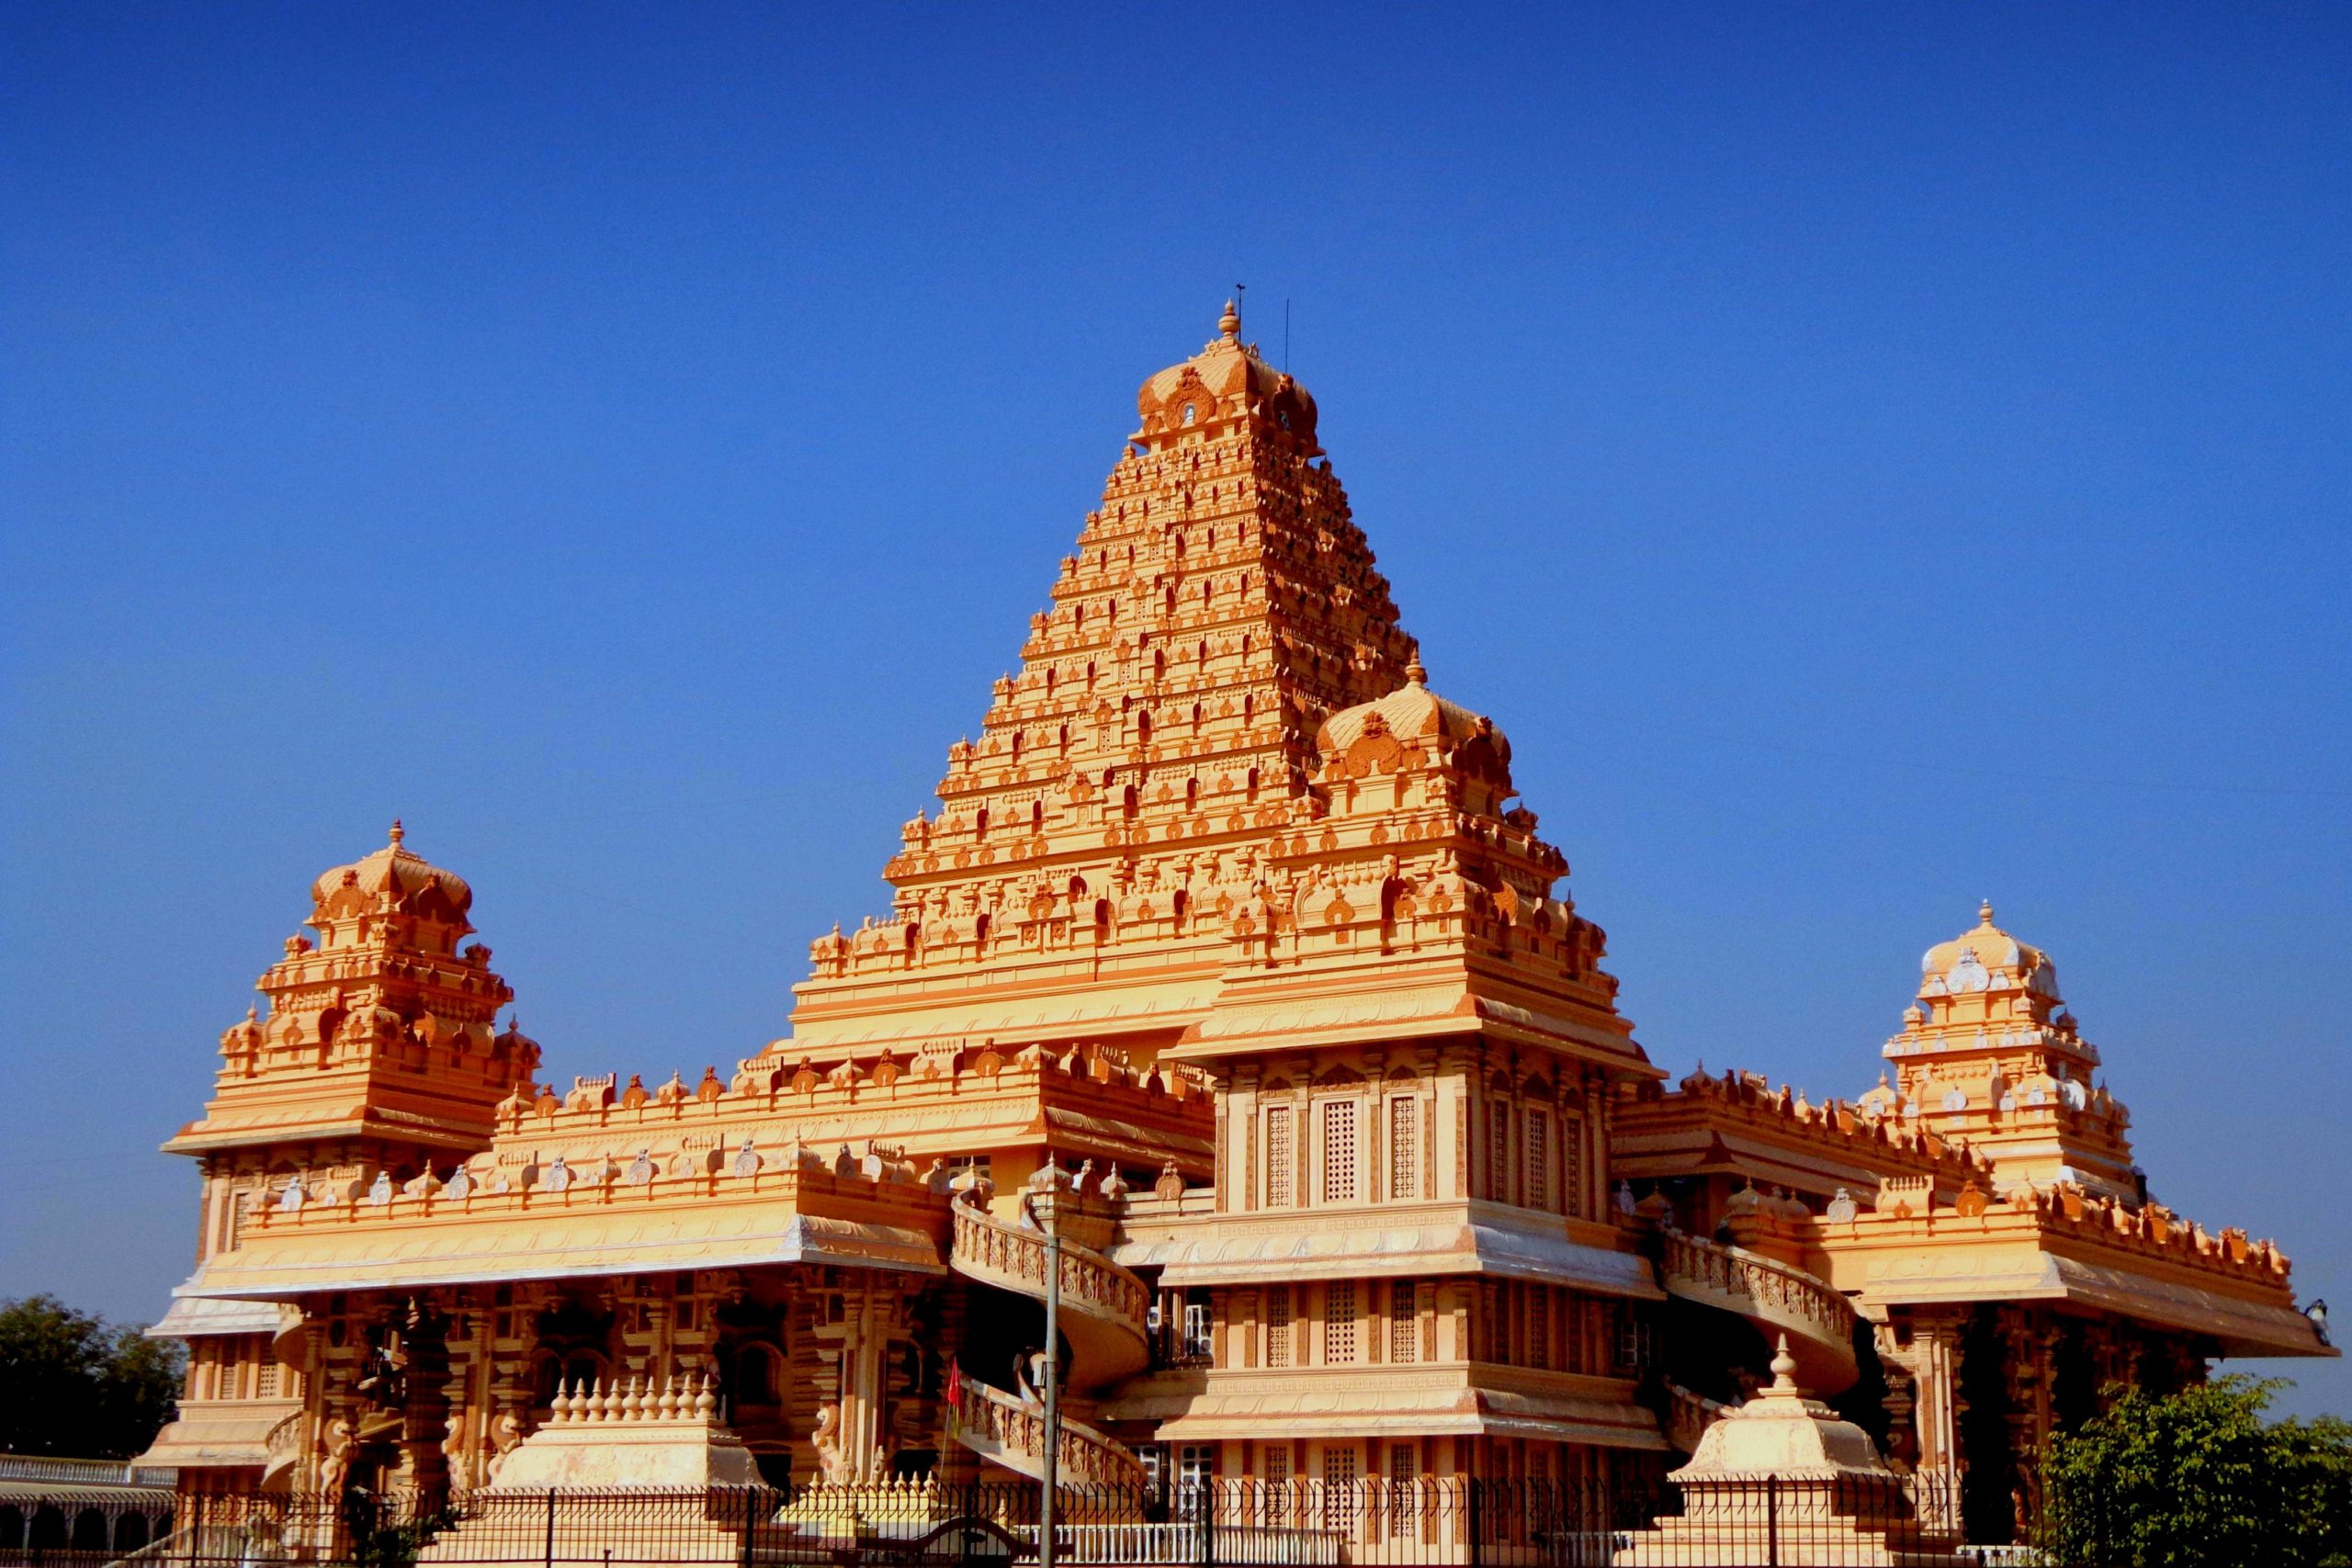 Temples in Delhi open for Navratri under strict Covid rules